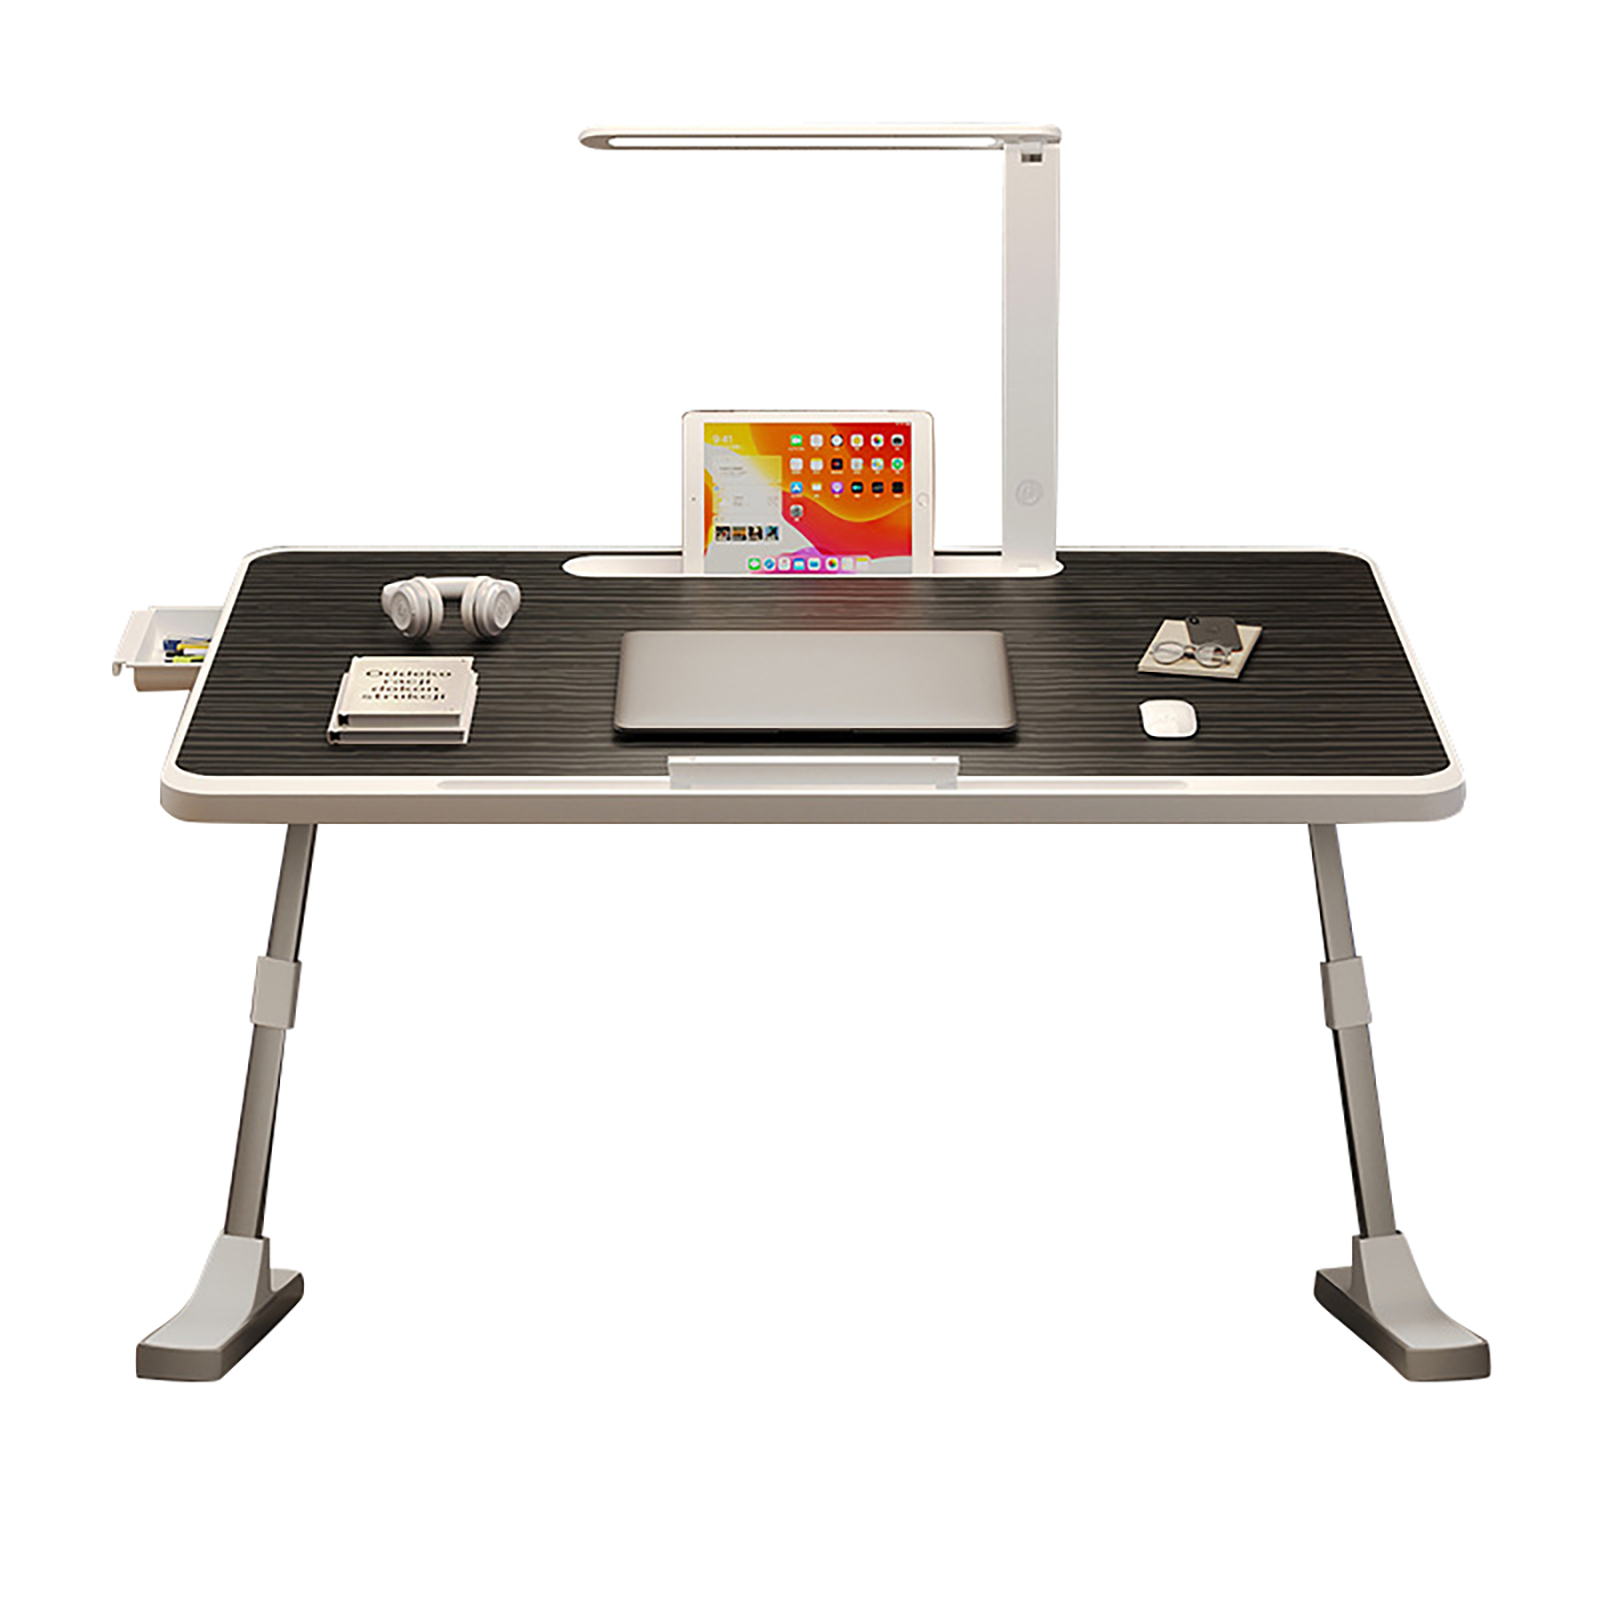 Laptop Desk For Bed With LED Lamp 3 Levels Brightness 5 Adjustable Heights 10.6-15.4Inch Foldable Multifunctional Bed Desk